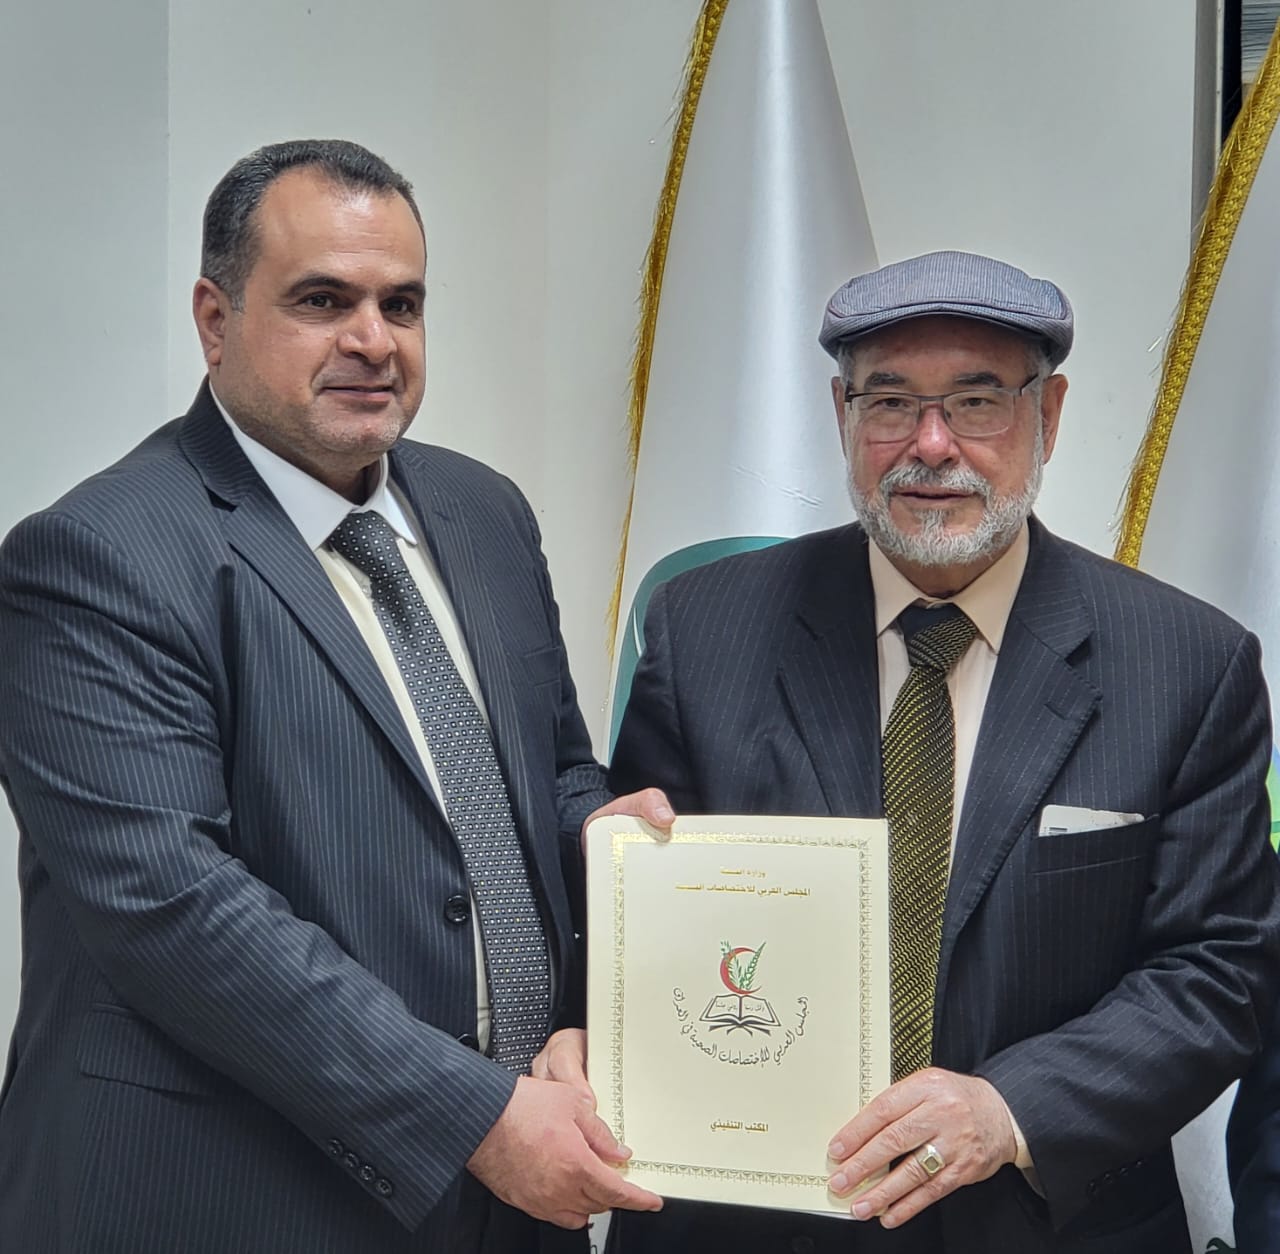 8 prof dr ehtuish trip Karbala iraq hospital centers evaluation